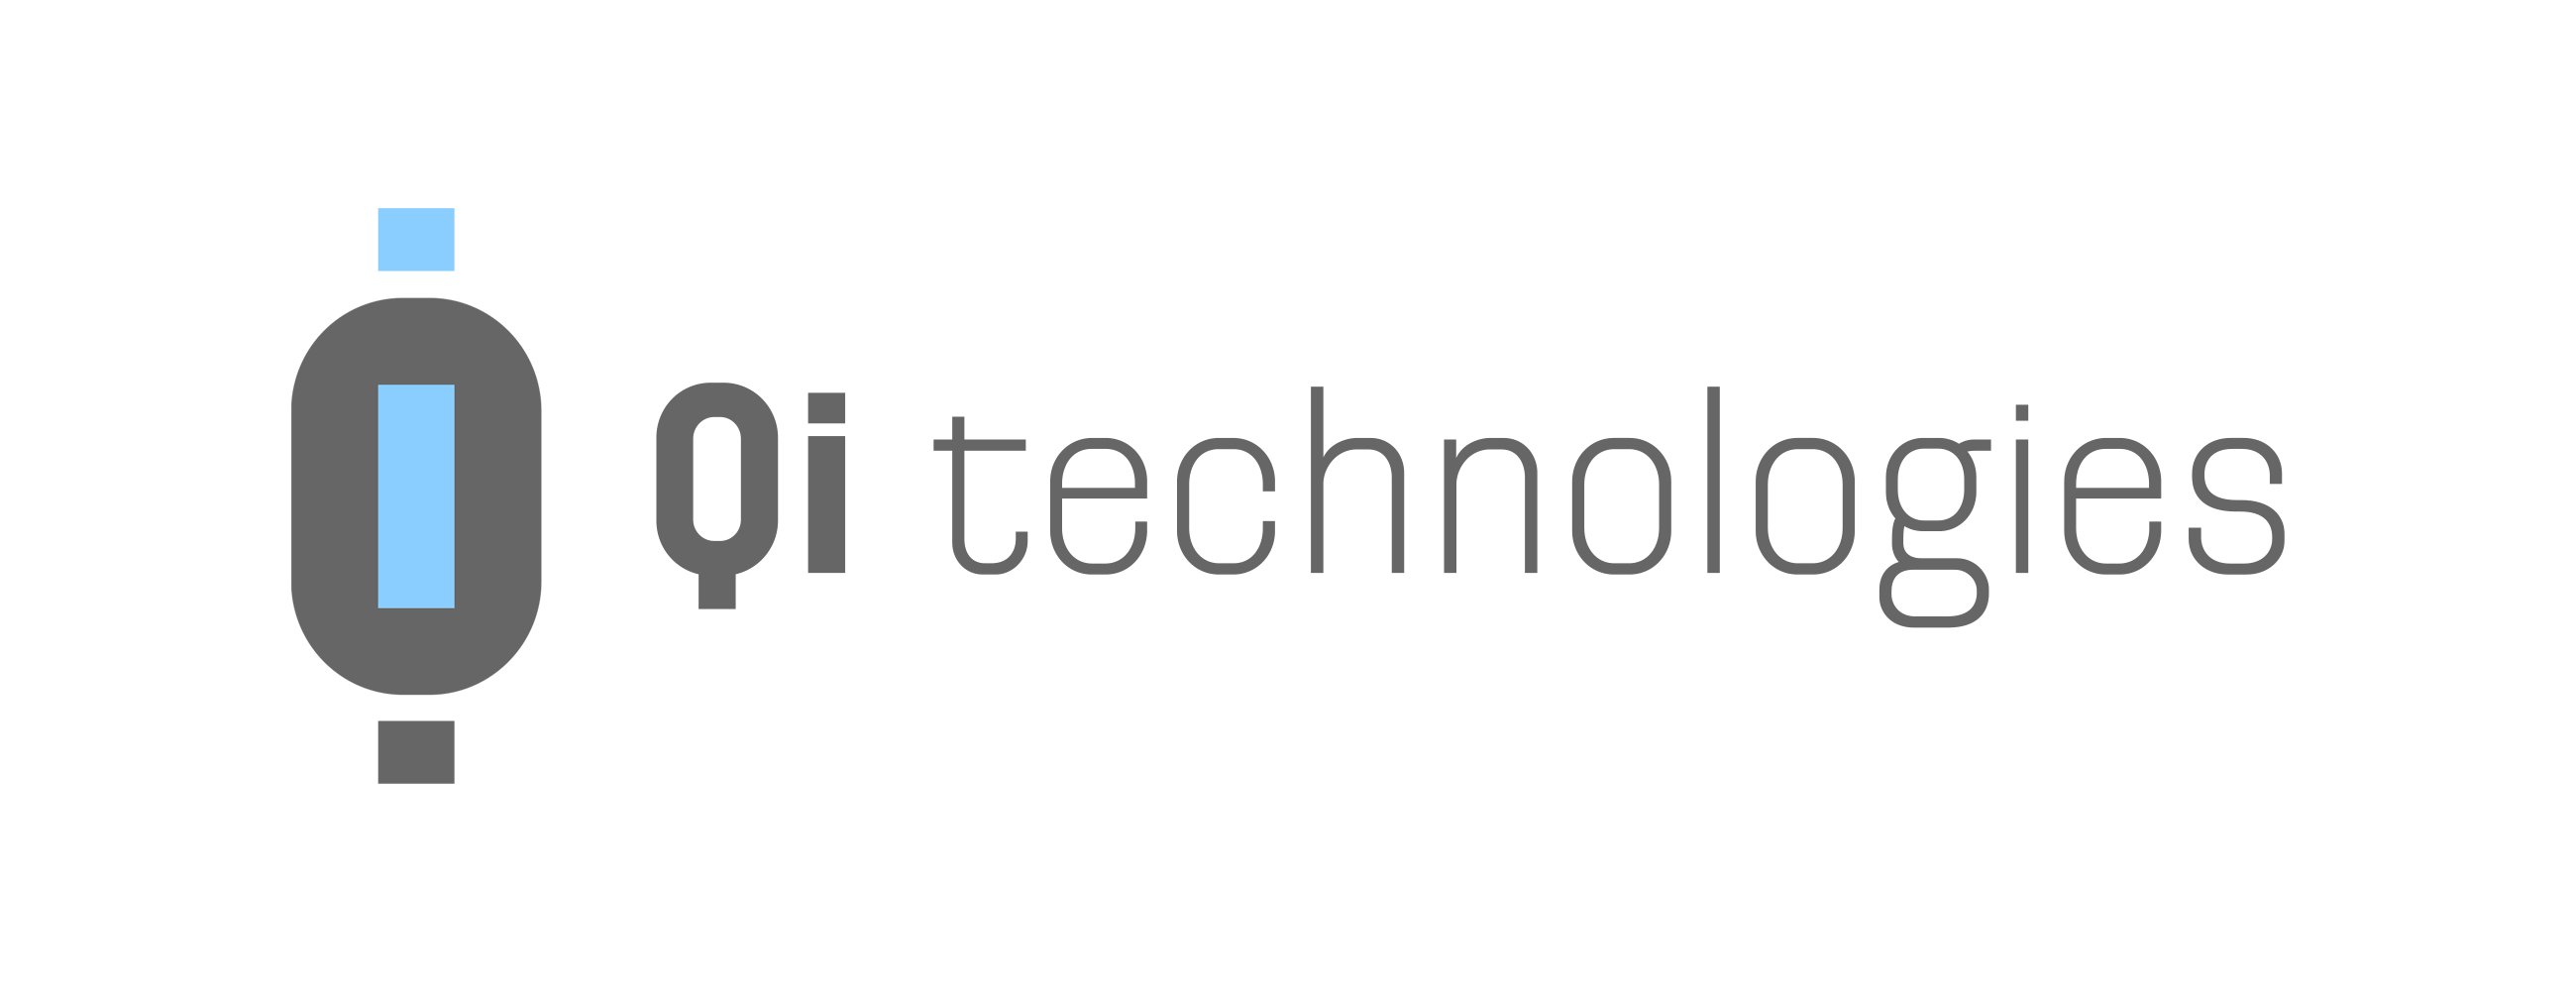 Qi technologies logo